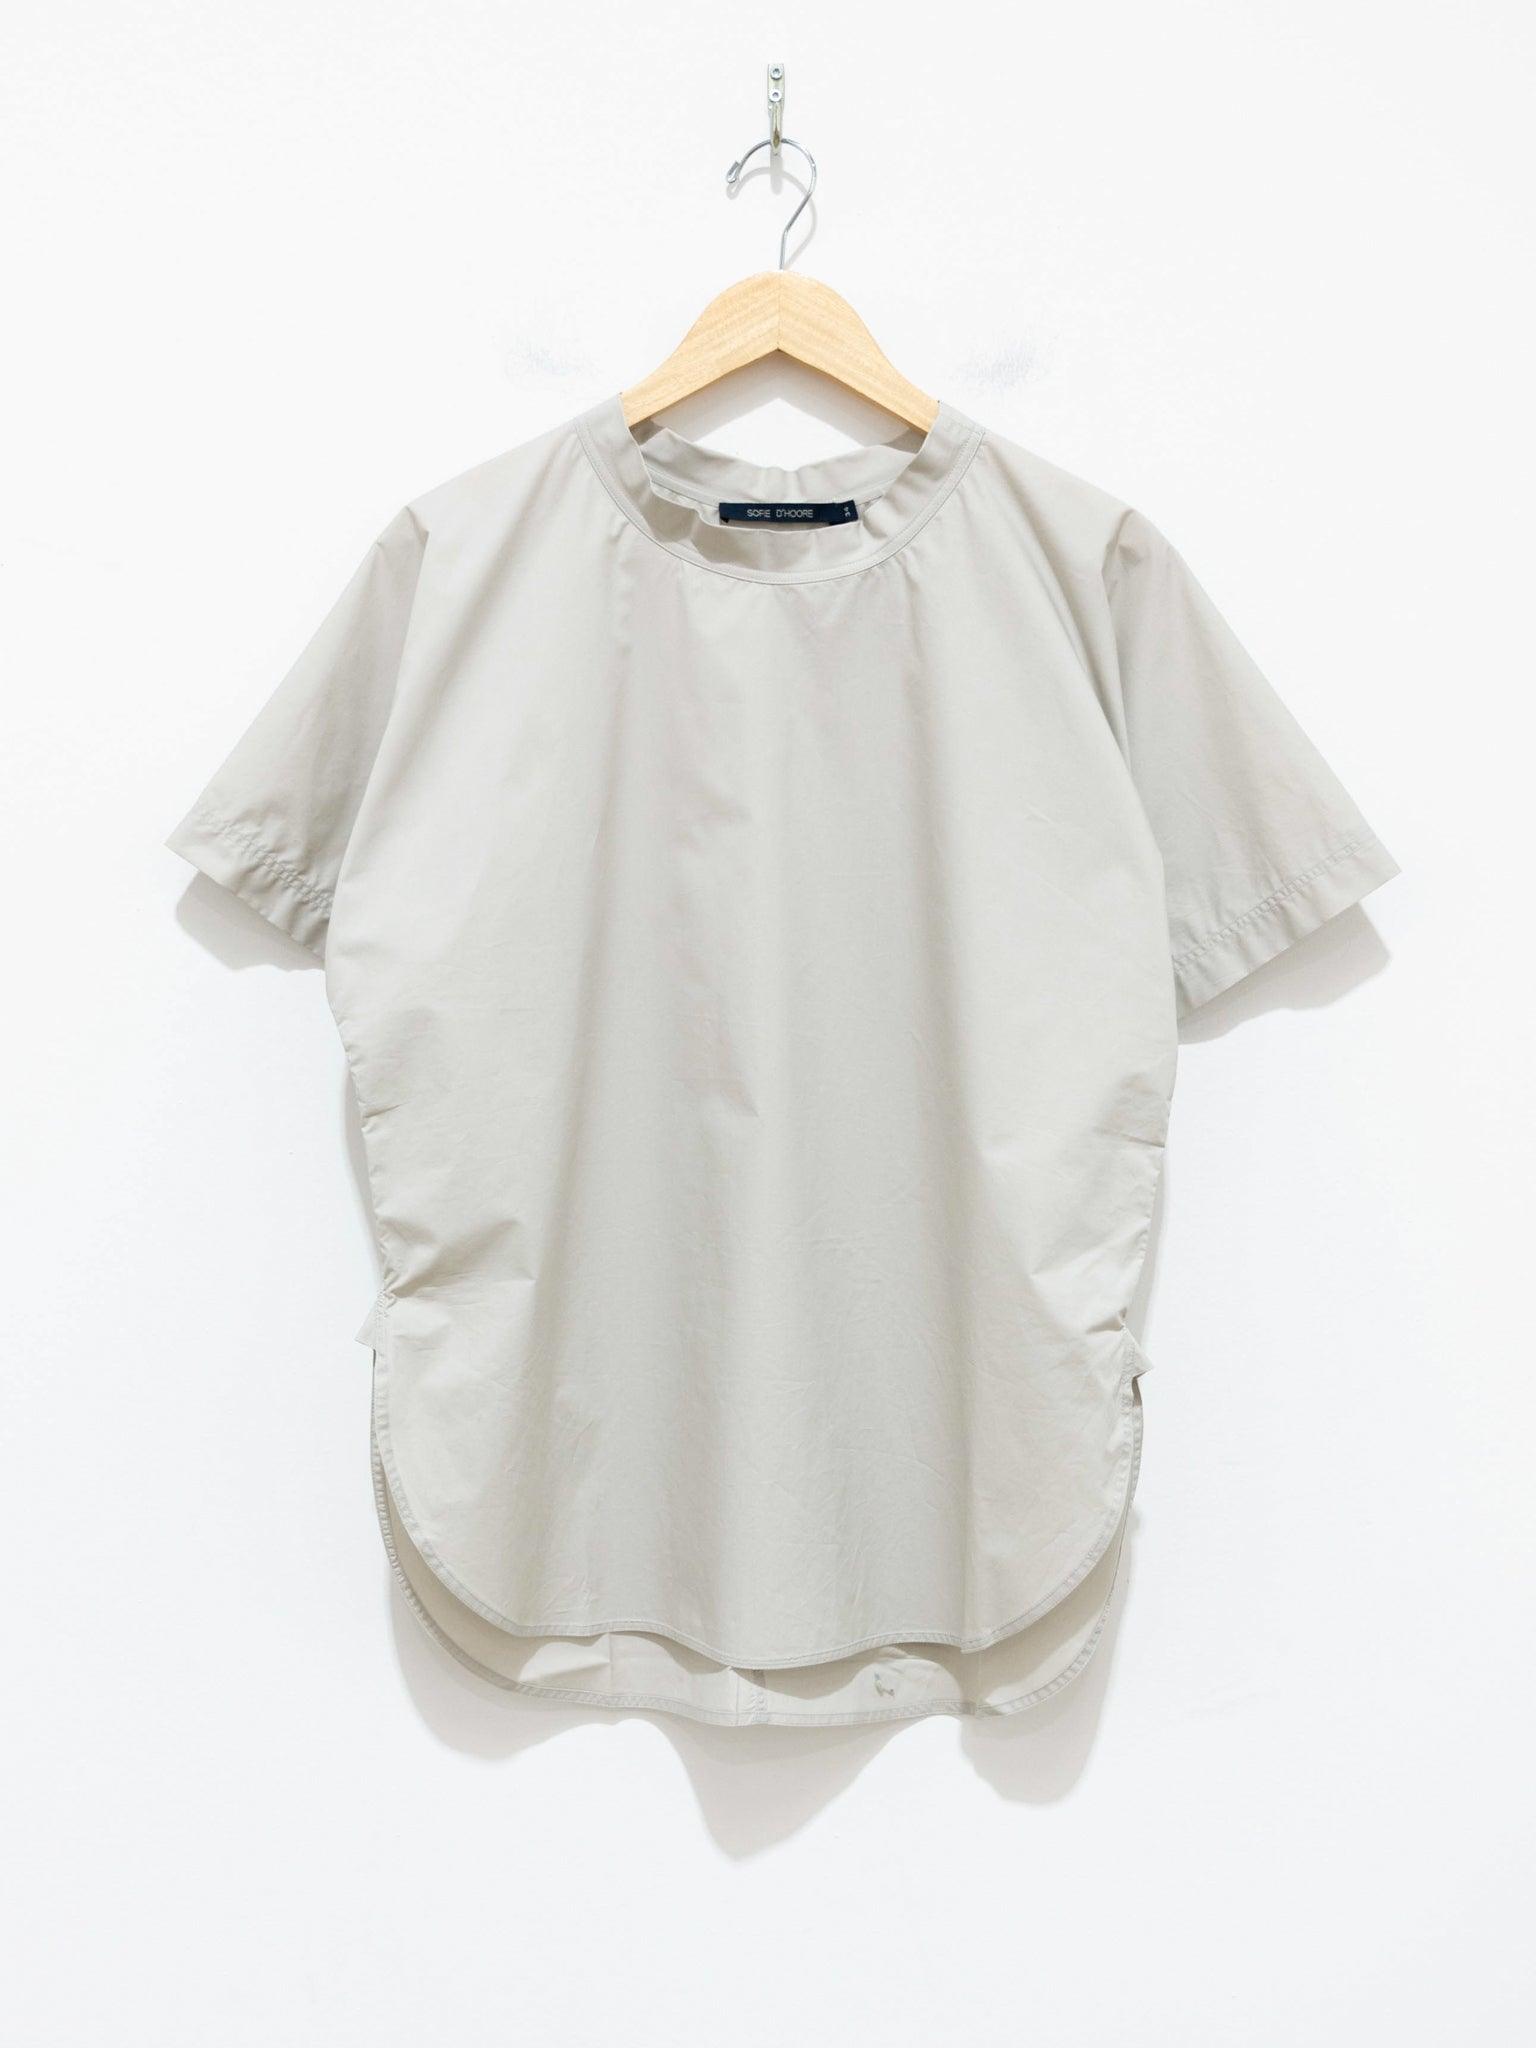 Namu Shop - Sofie D'Hoore Bagel Shirt - Clay